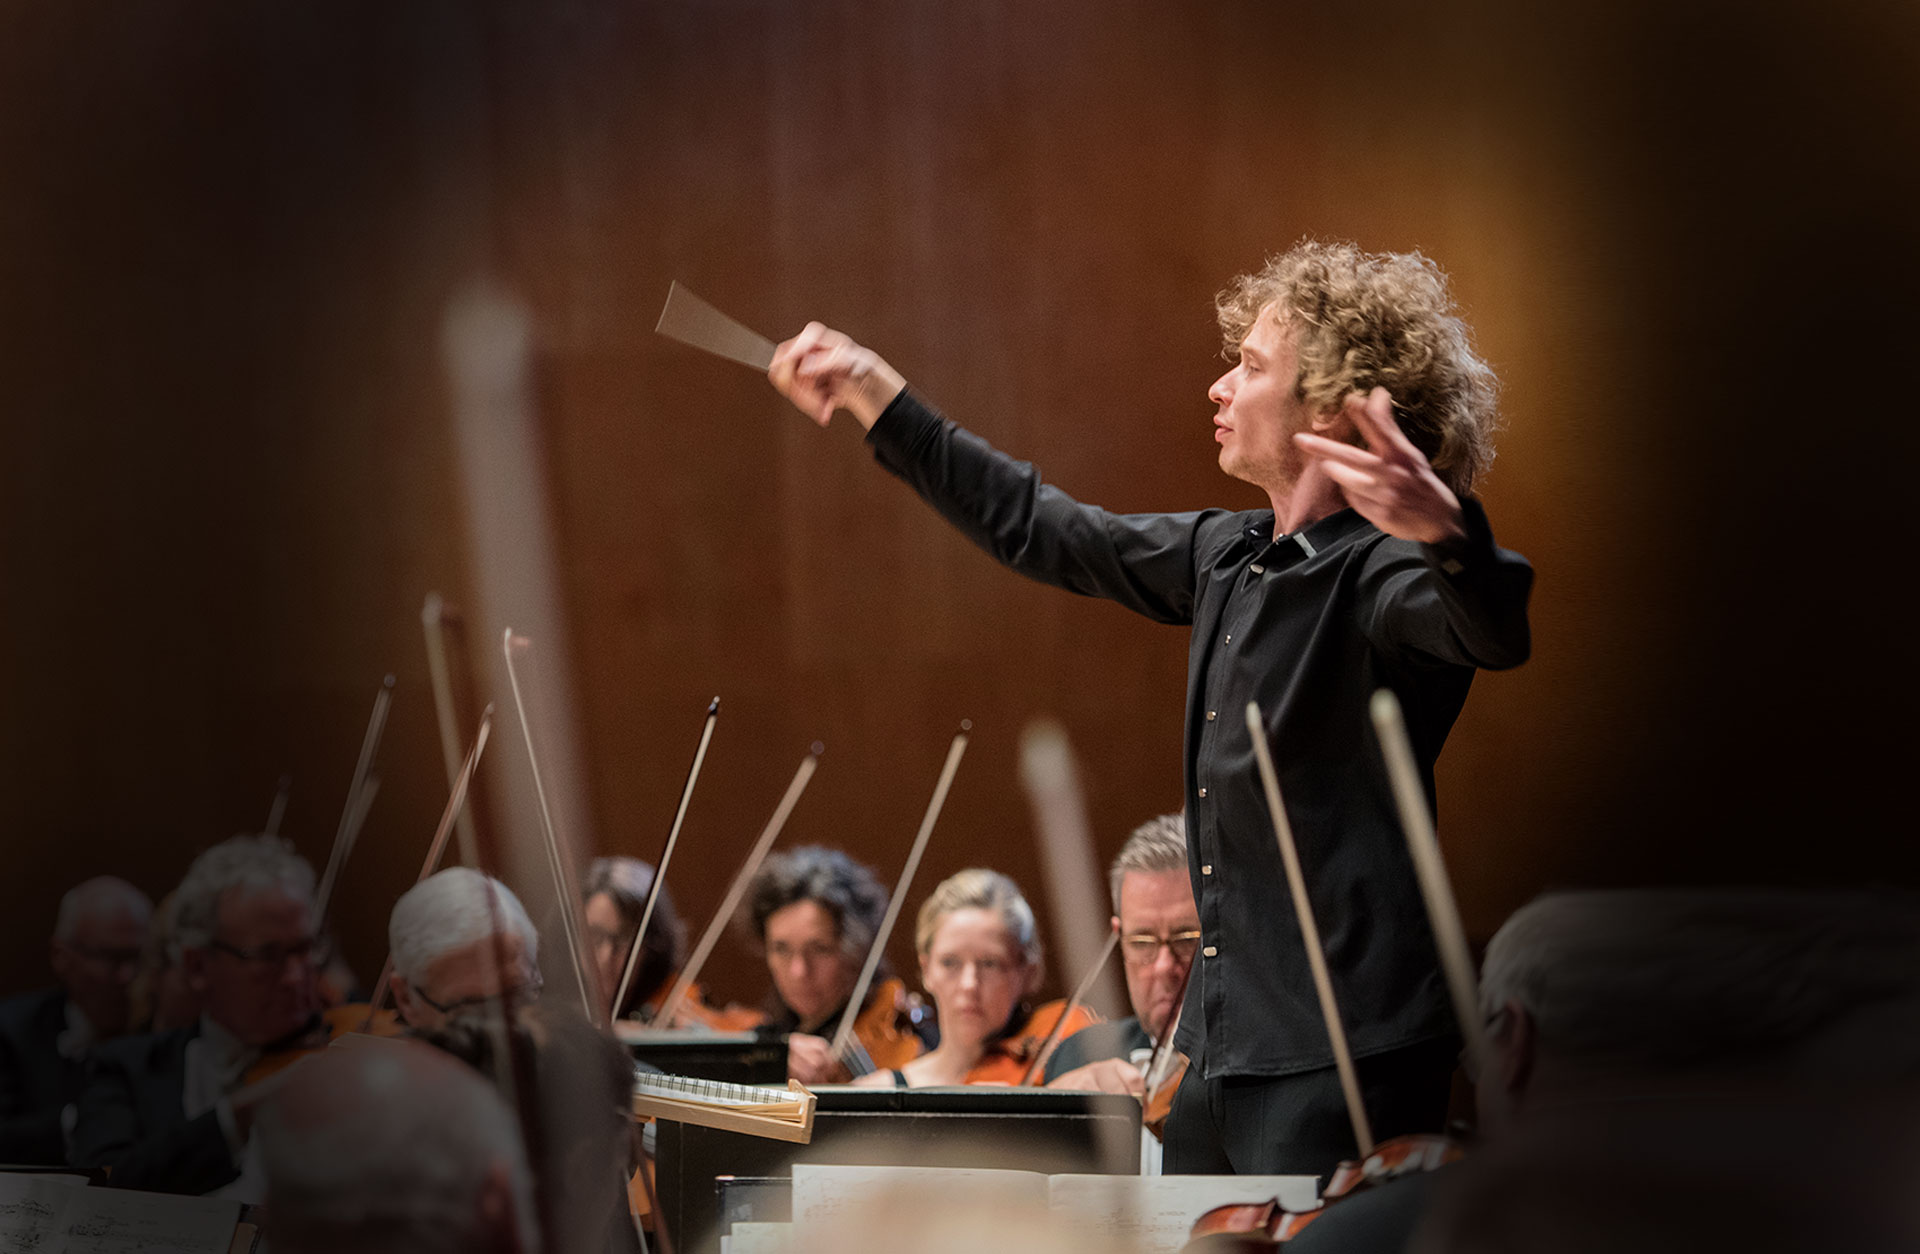 Dirigenten Rouvali i kraftfull pose med taktpinnen i handen.